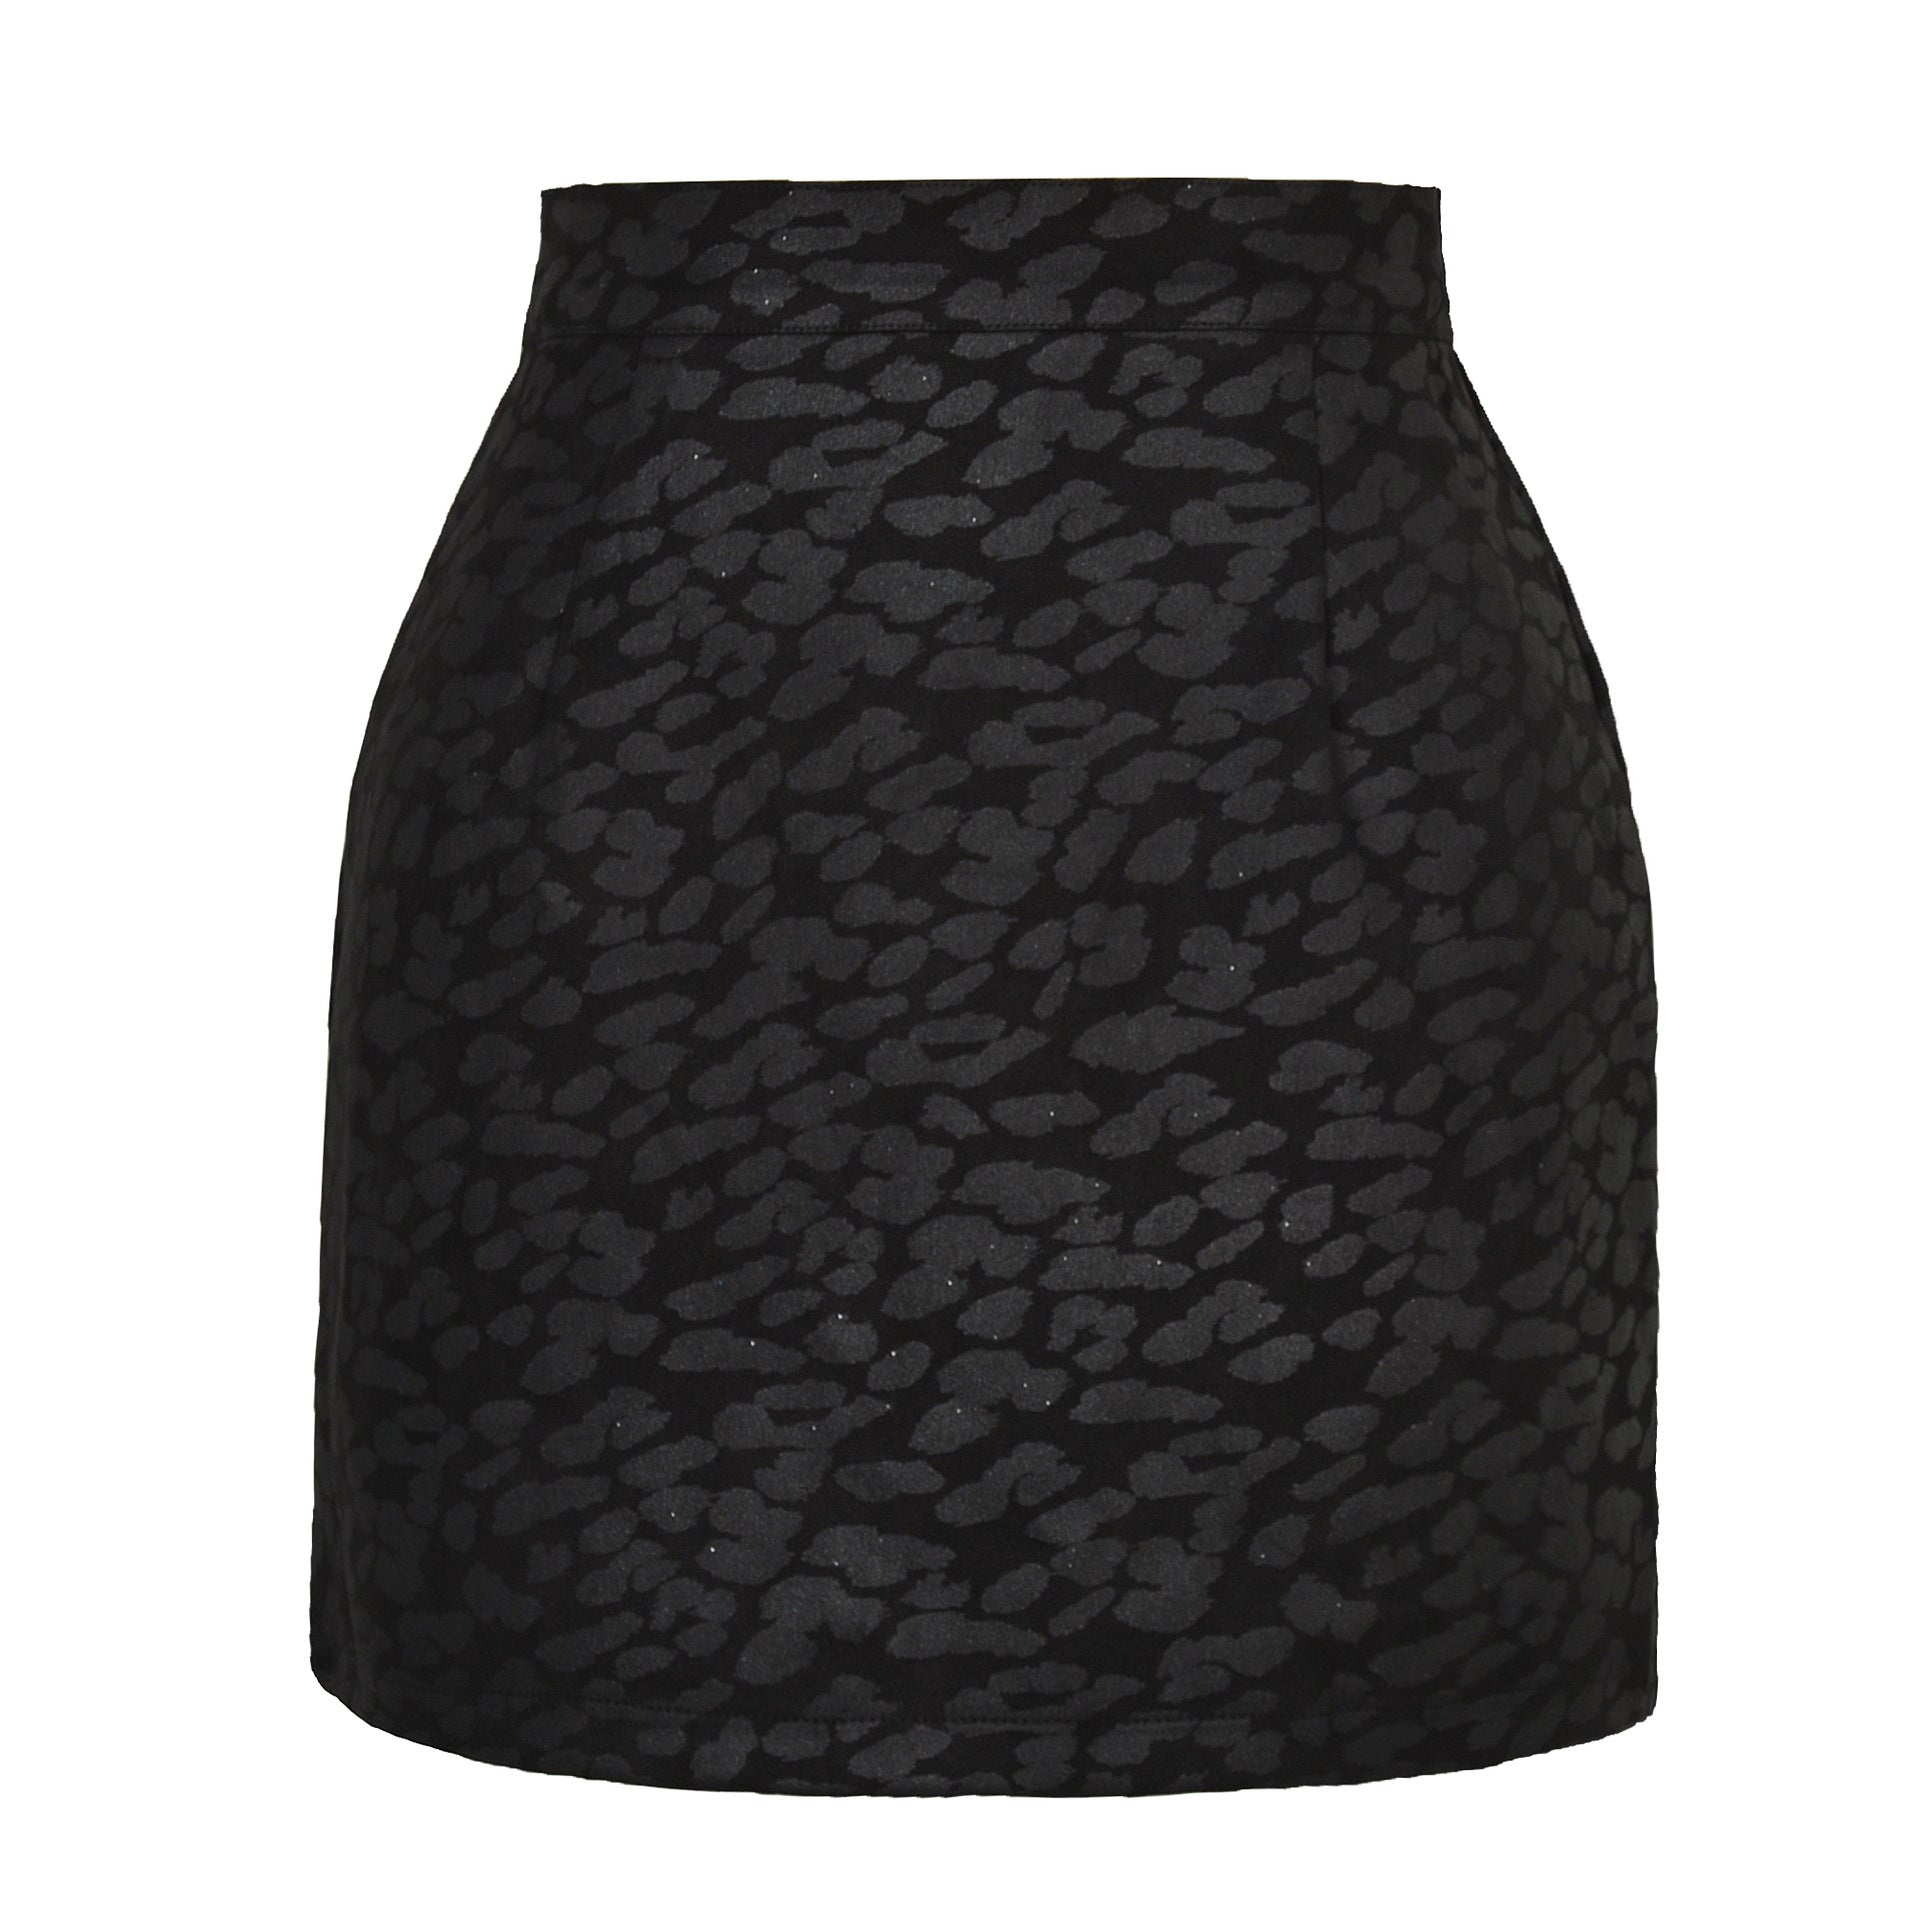 Suede Leopard Skirt - S / Black